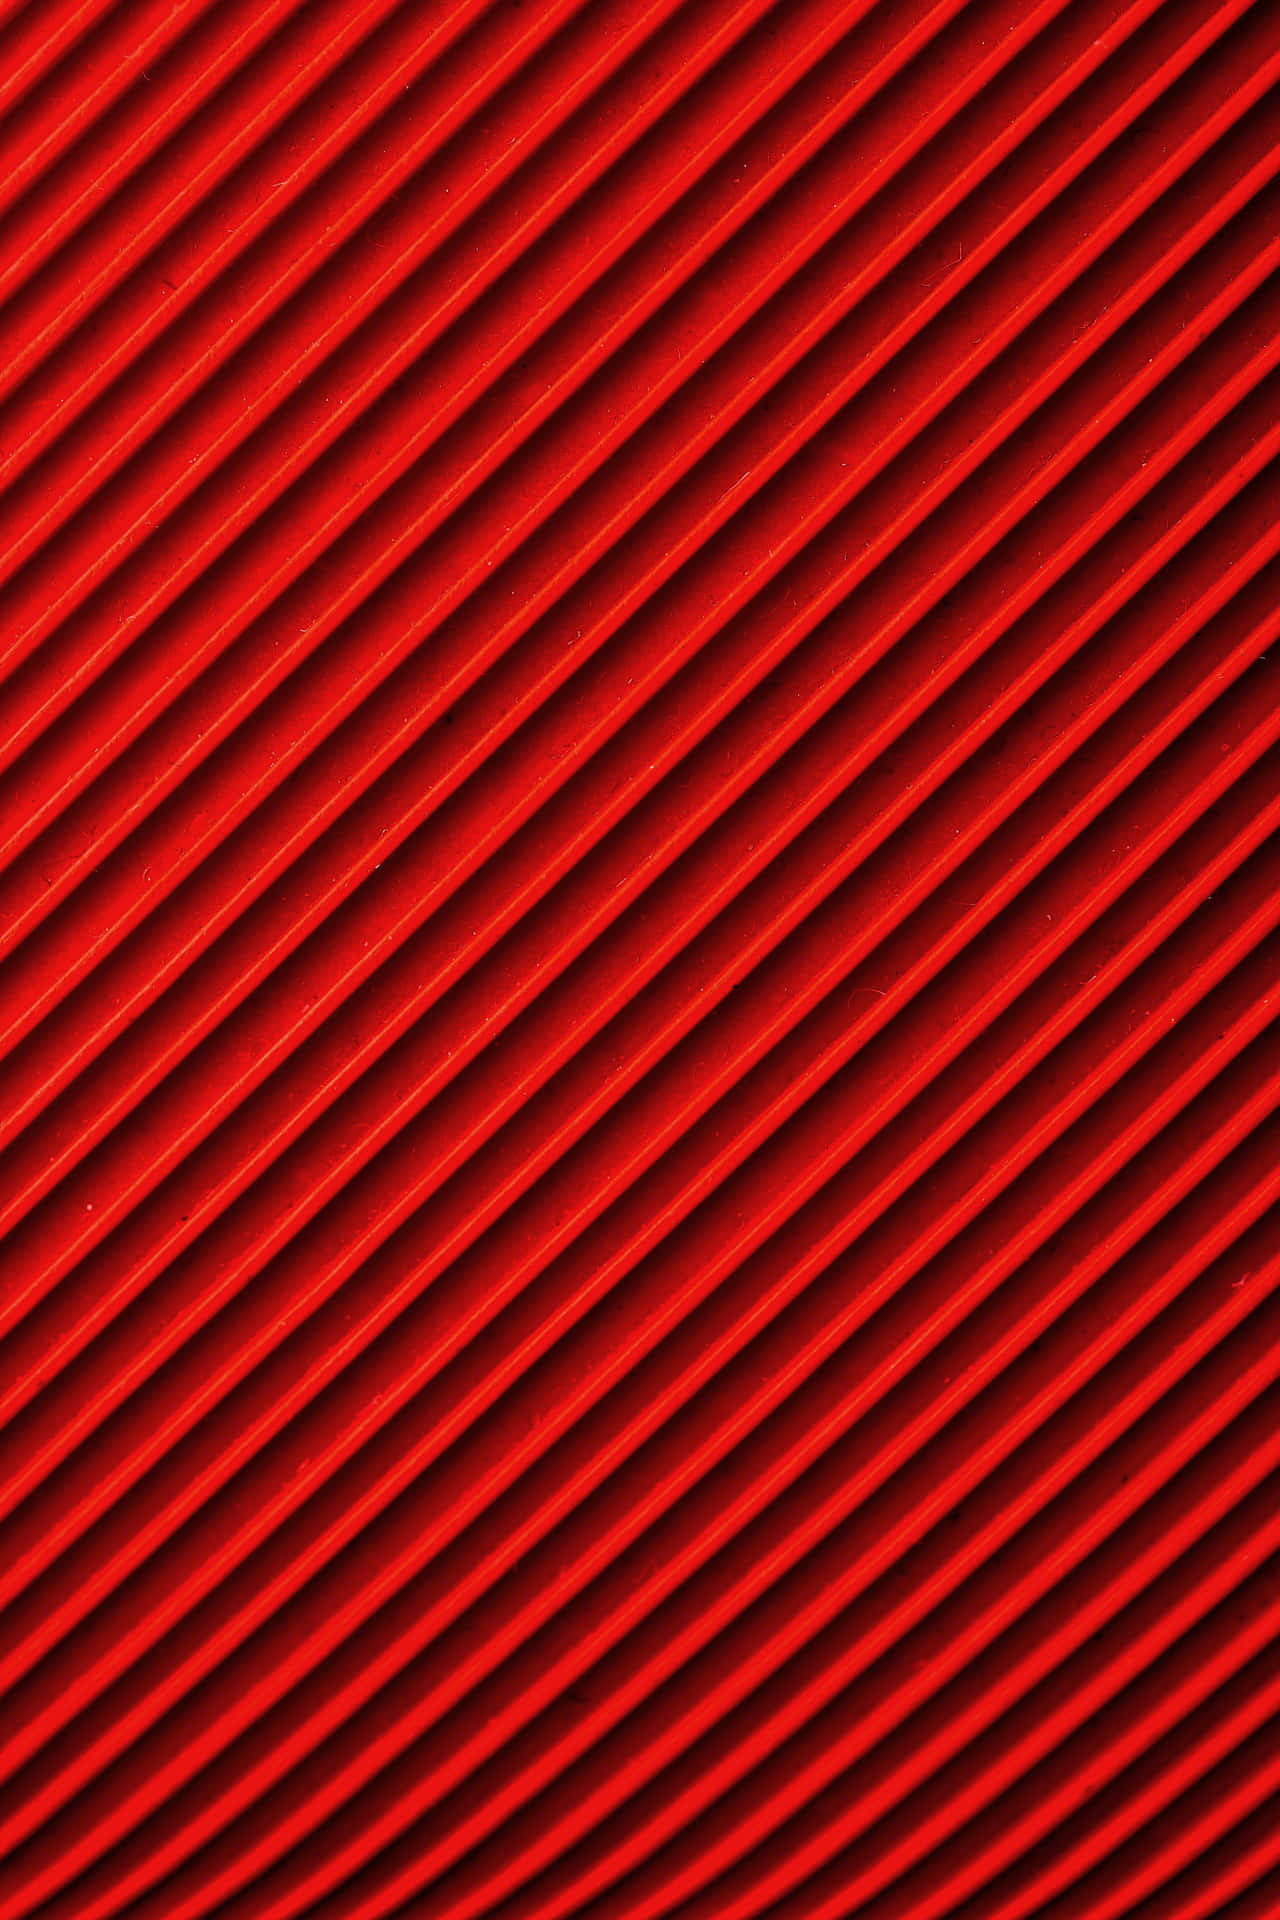 Imagende Color Rojo Fibra De Carbono